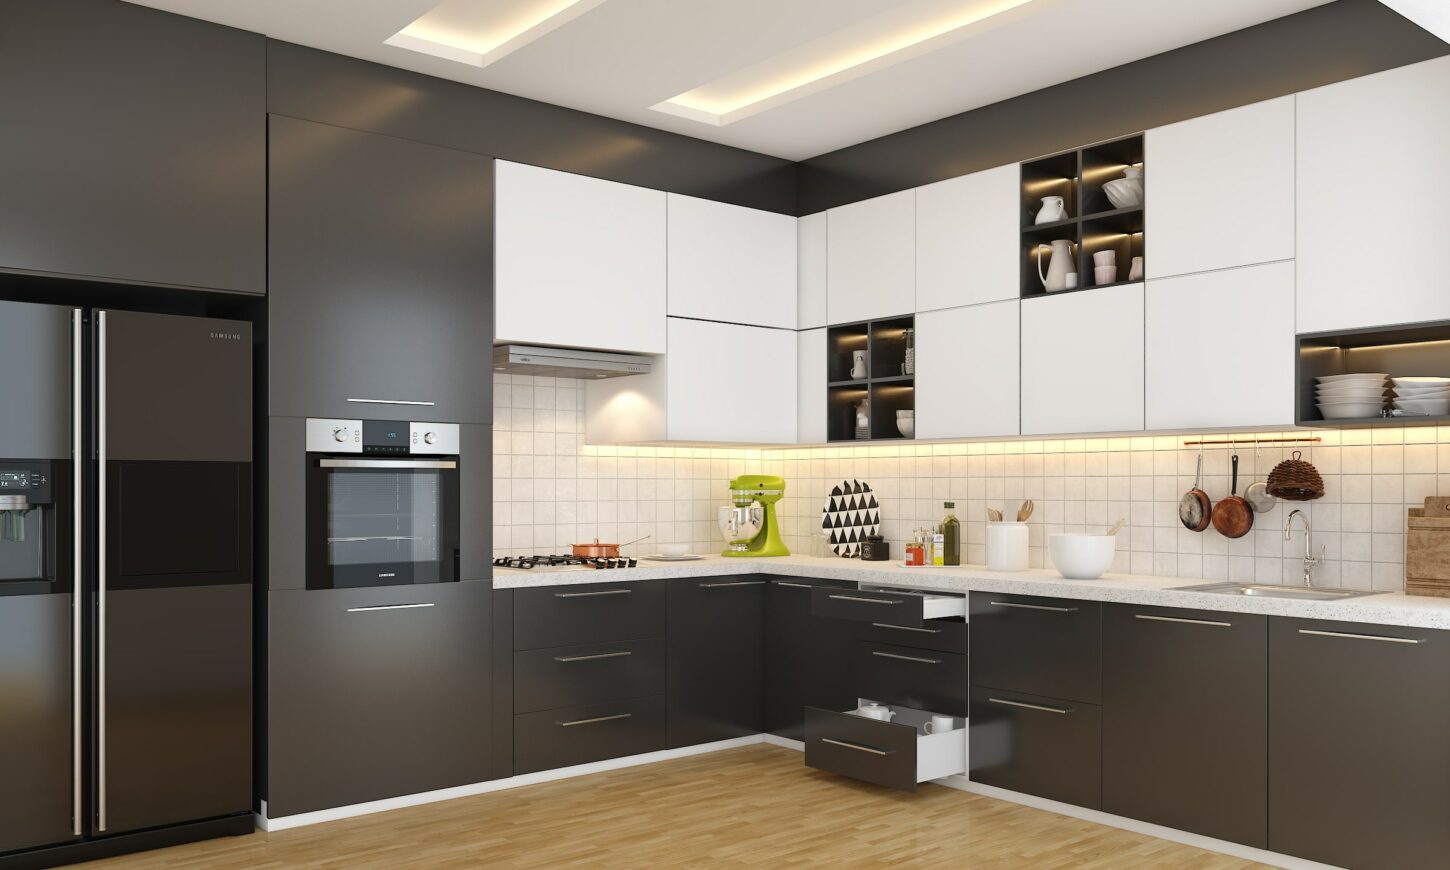 3bhk flat modern contemporary classic modular kitchen design of vishwas bhagat designed by design cafe